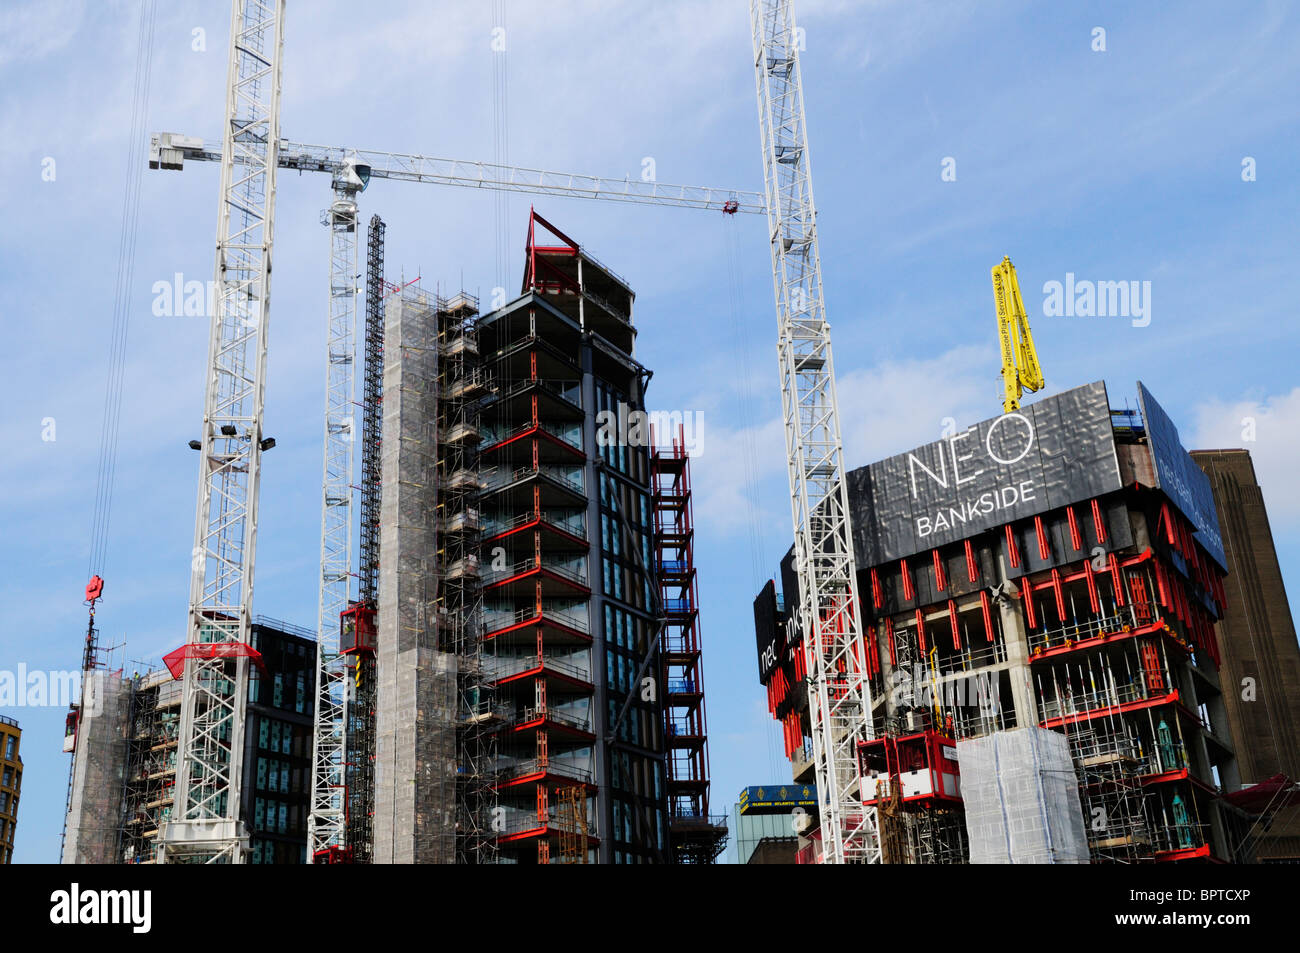 NEO Bankside chantier, Southwark, London, England, UK Banque D'Images